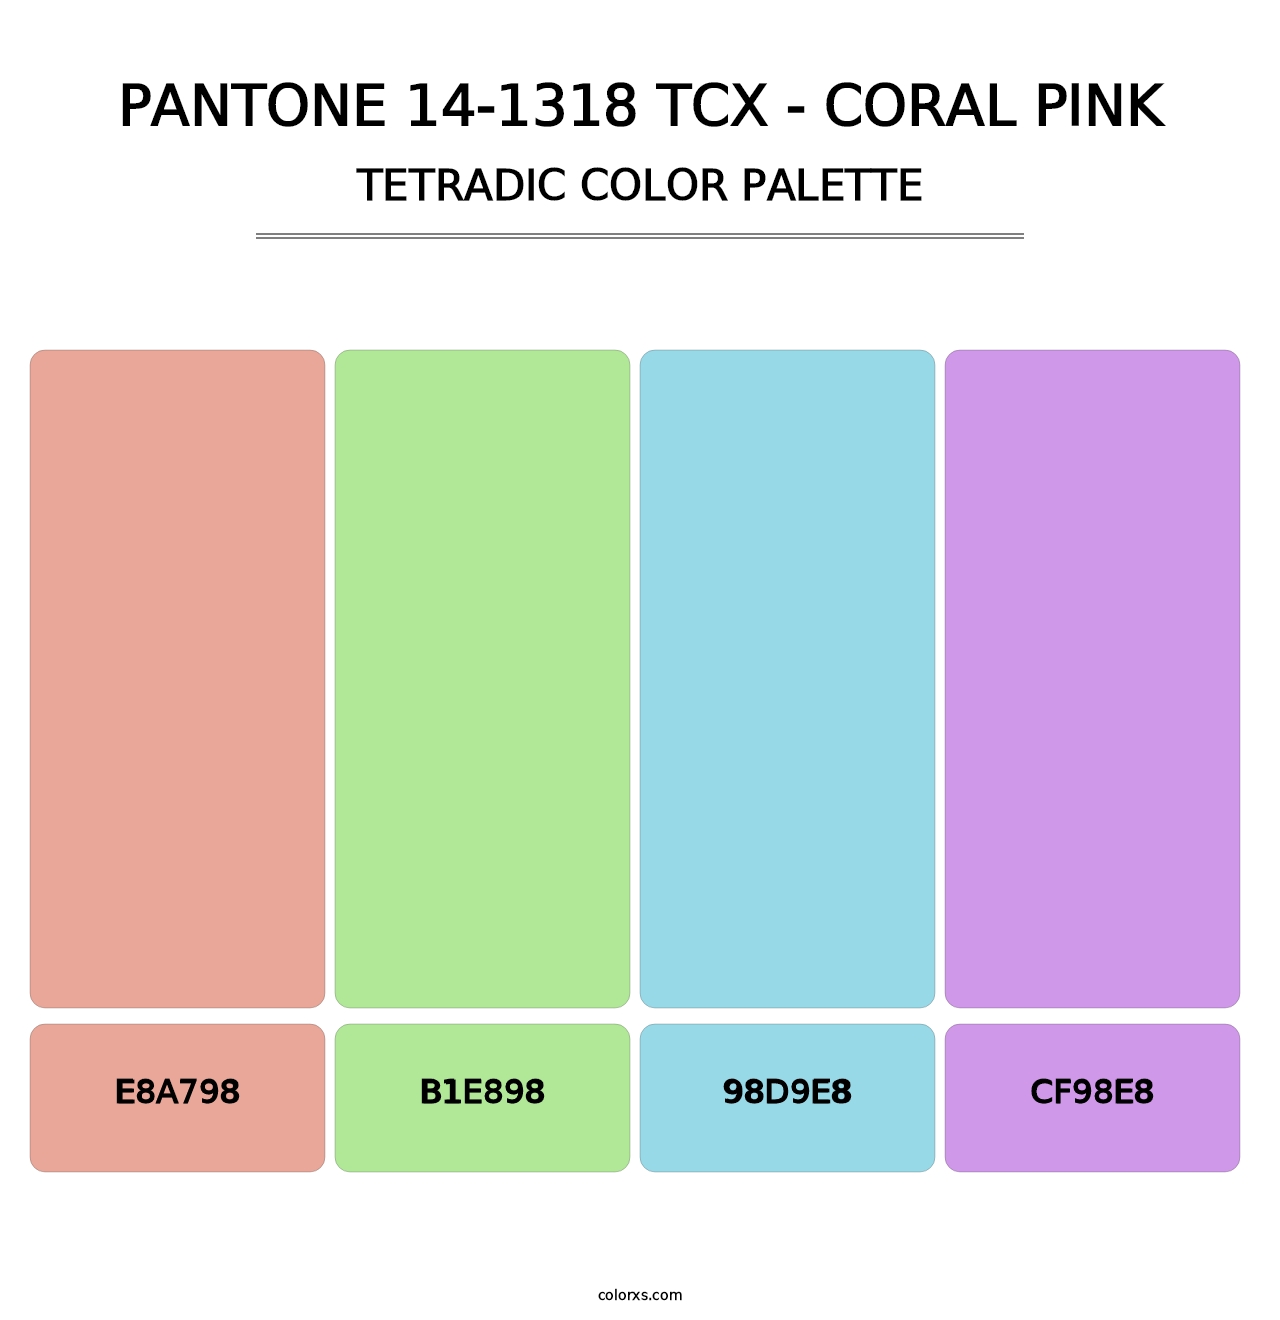 PANTONE 14-1318 TCX - Coral Pink - Tetradic Color Palette